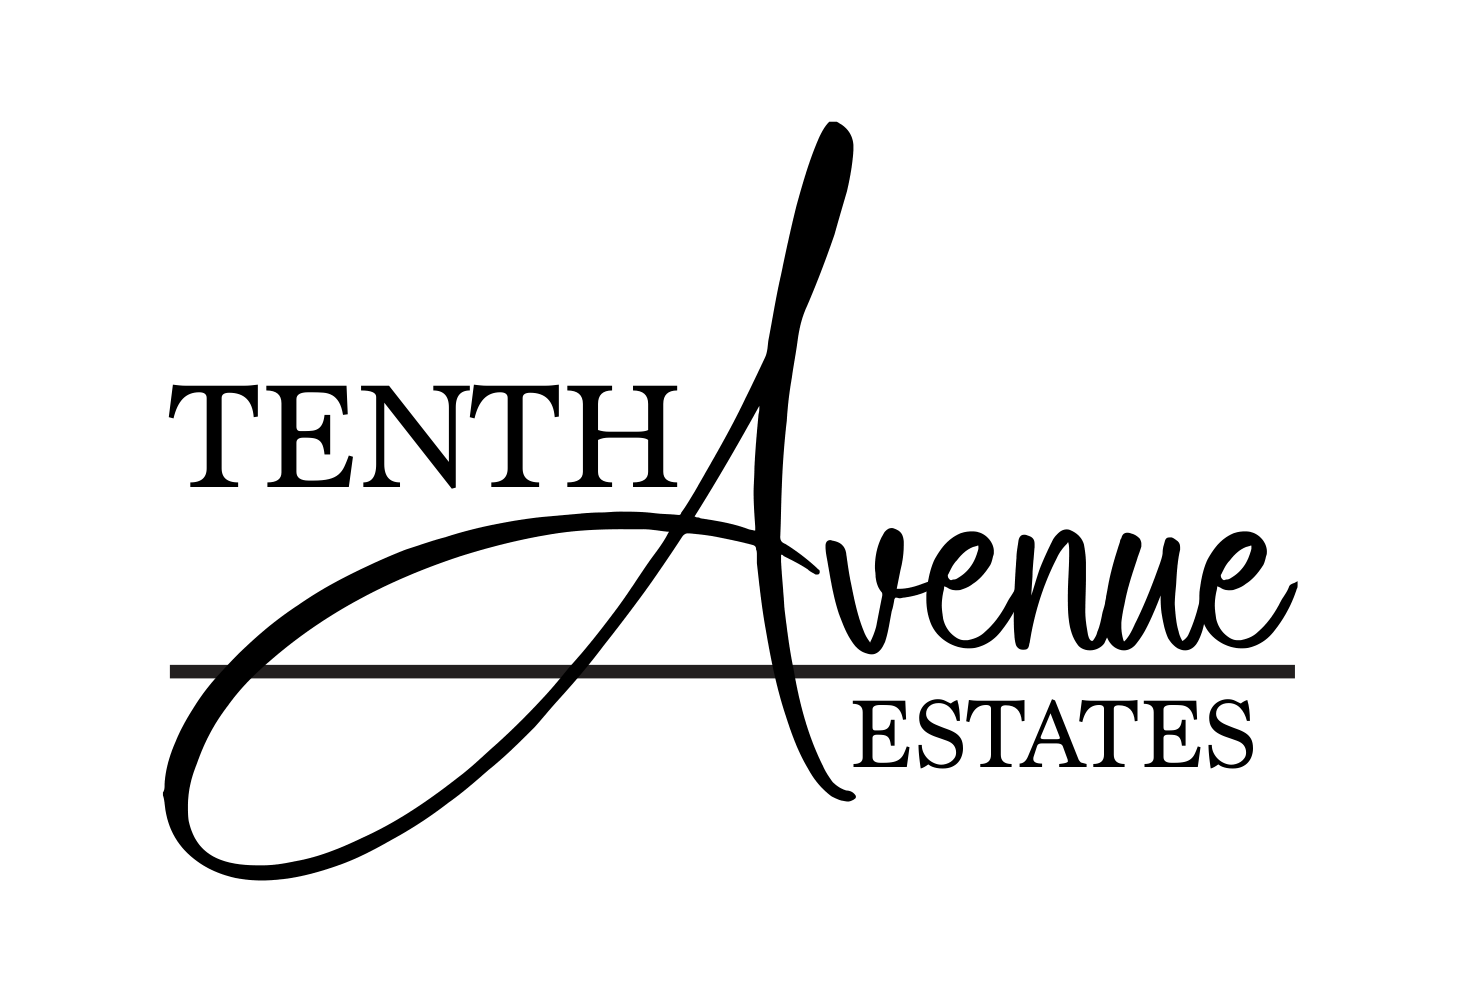 Tenth ave estates logo transparent